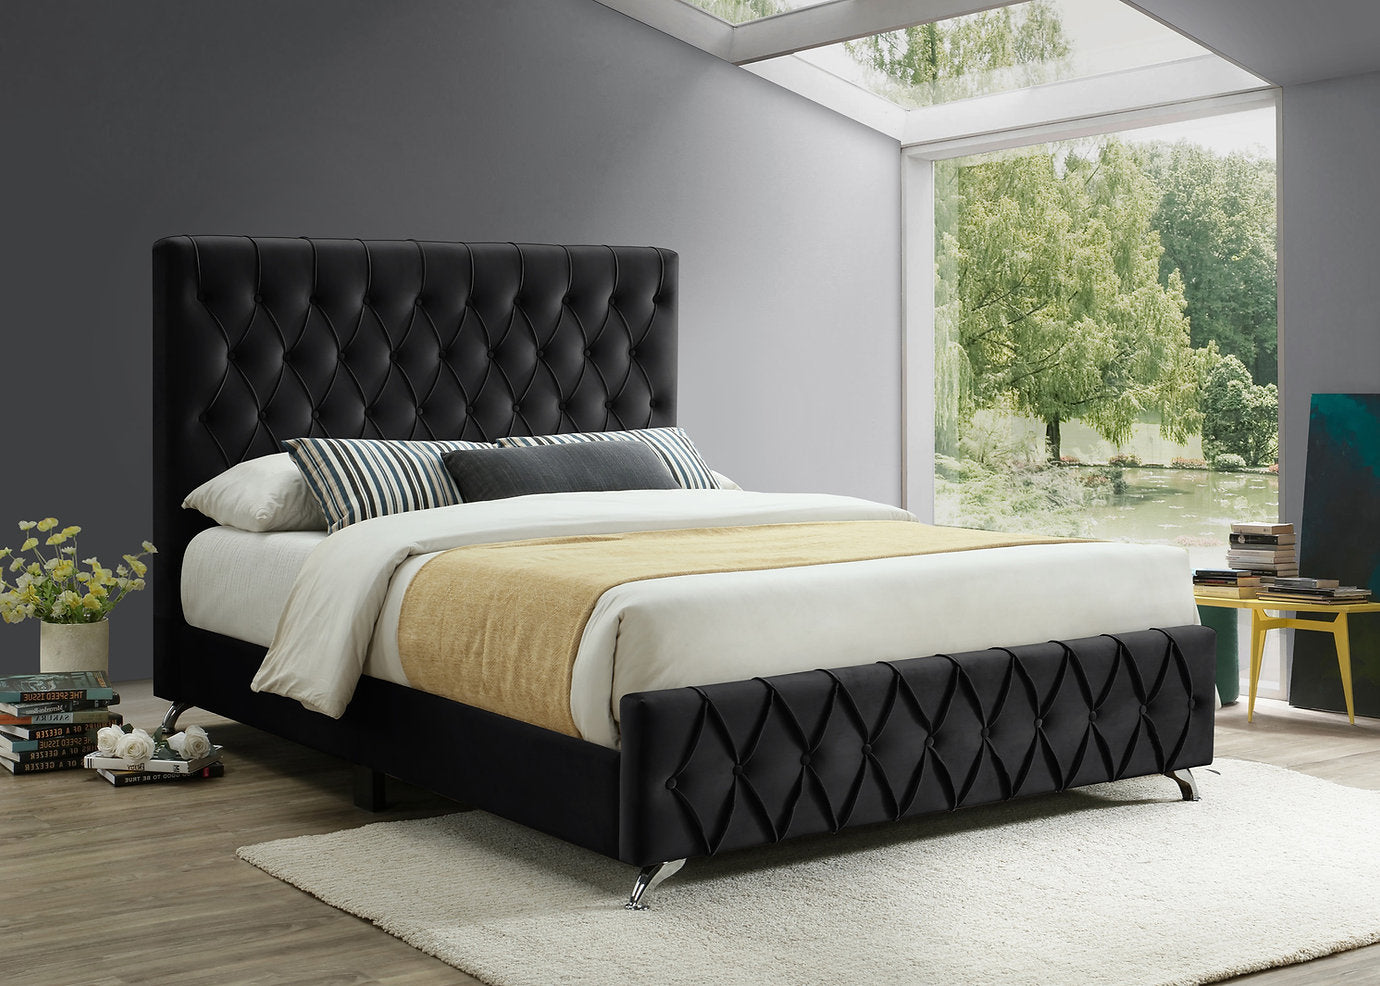 Contemporary Velvet Upholstered Bedframe with Diamond Pattern Details